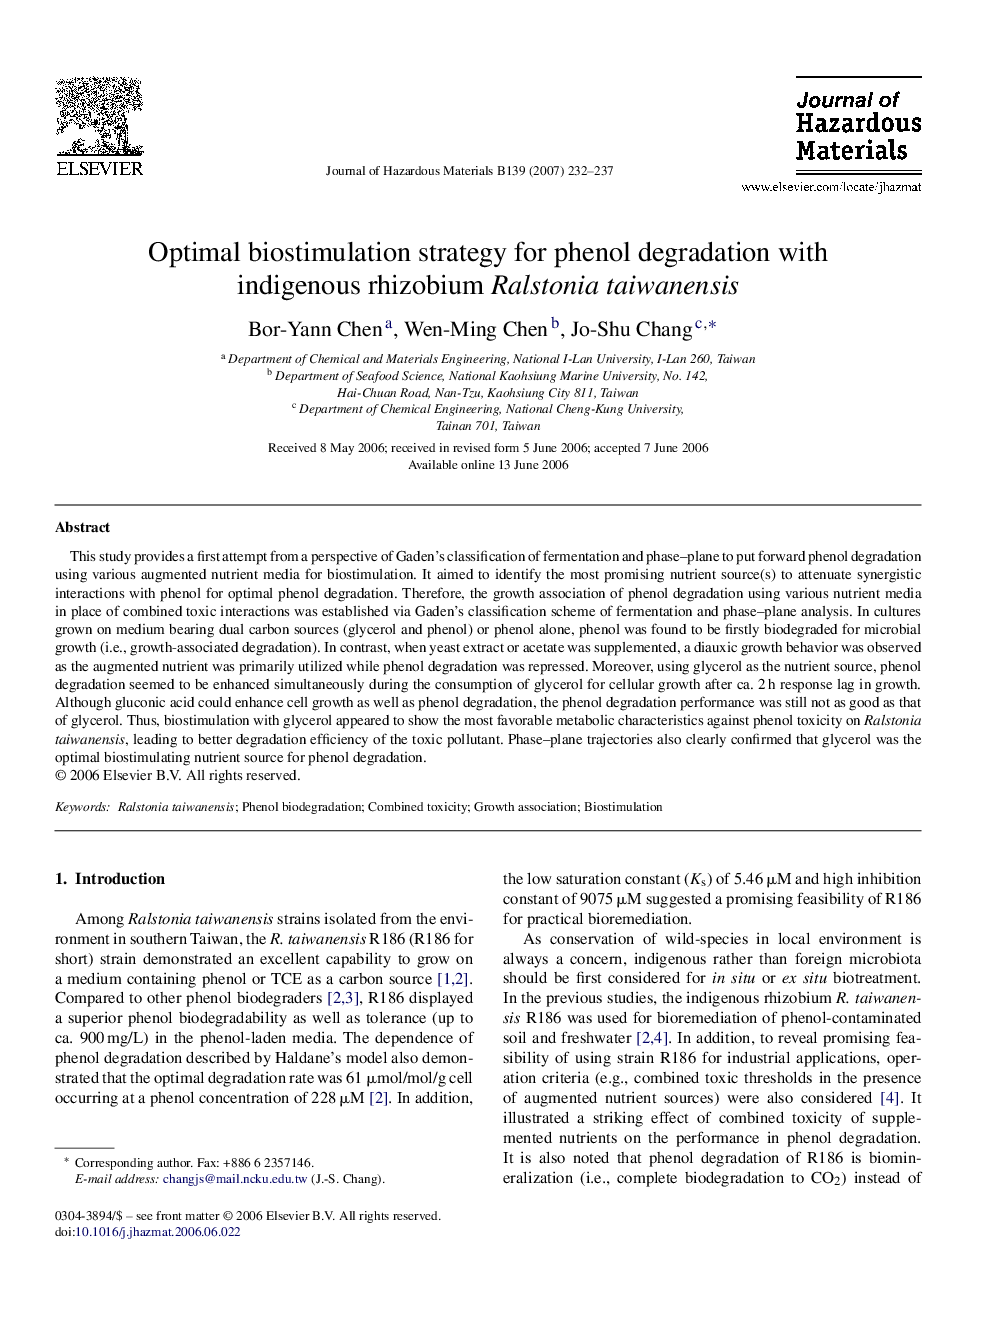 Optimal biostimulation strategy for phenol degradation with indigenous rhizobium Ralstonia taiwanensis